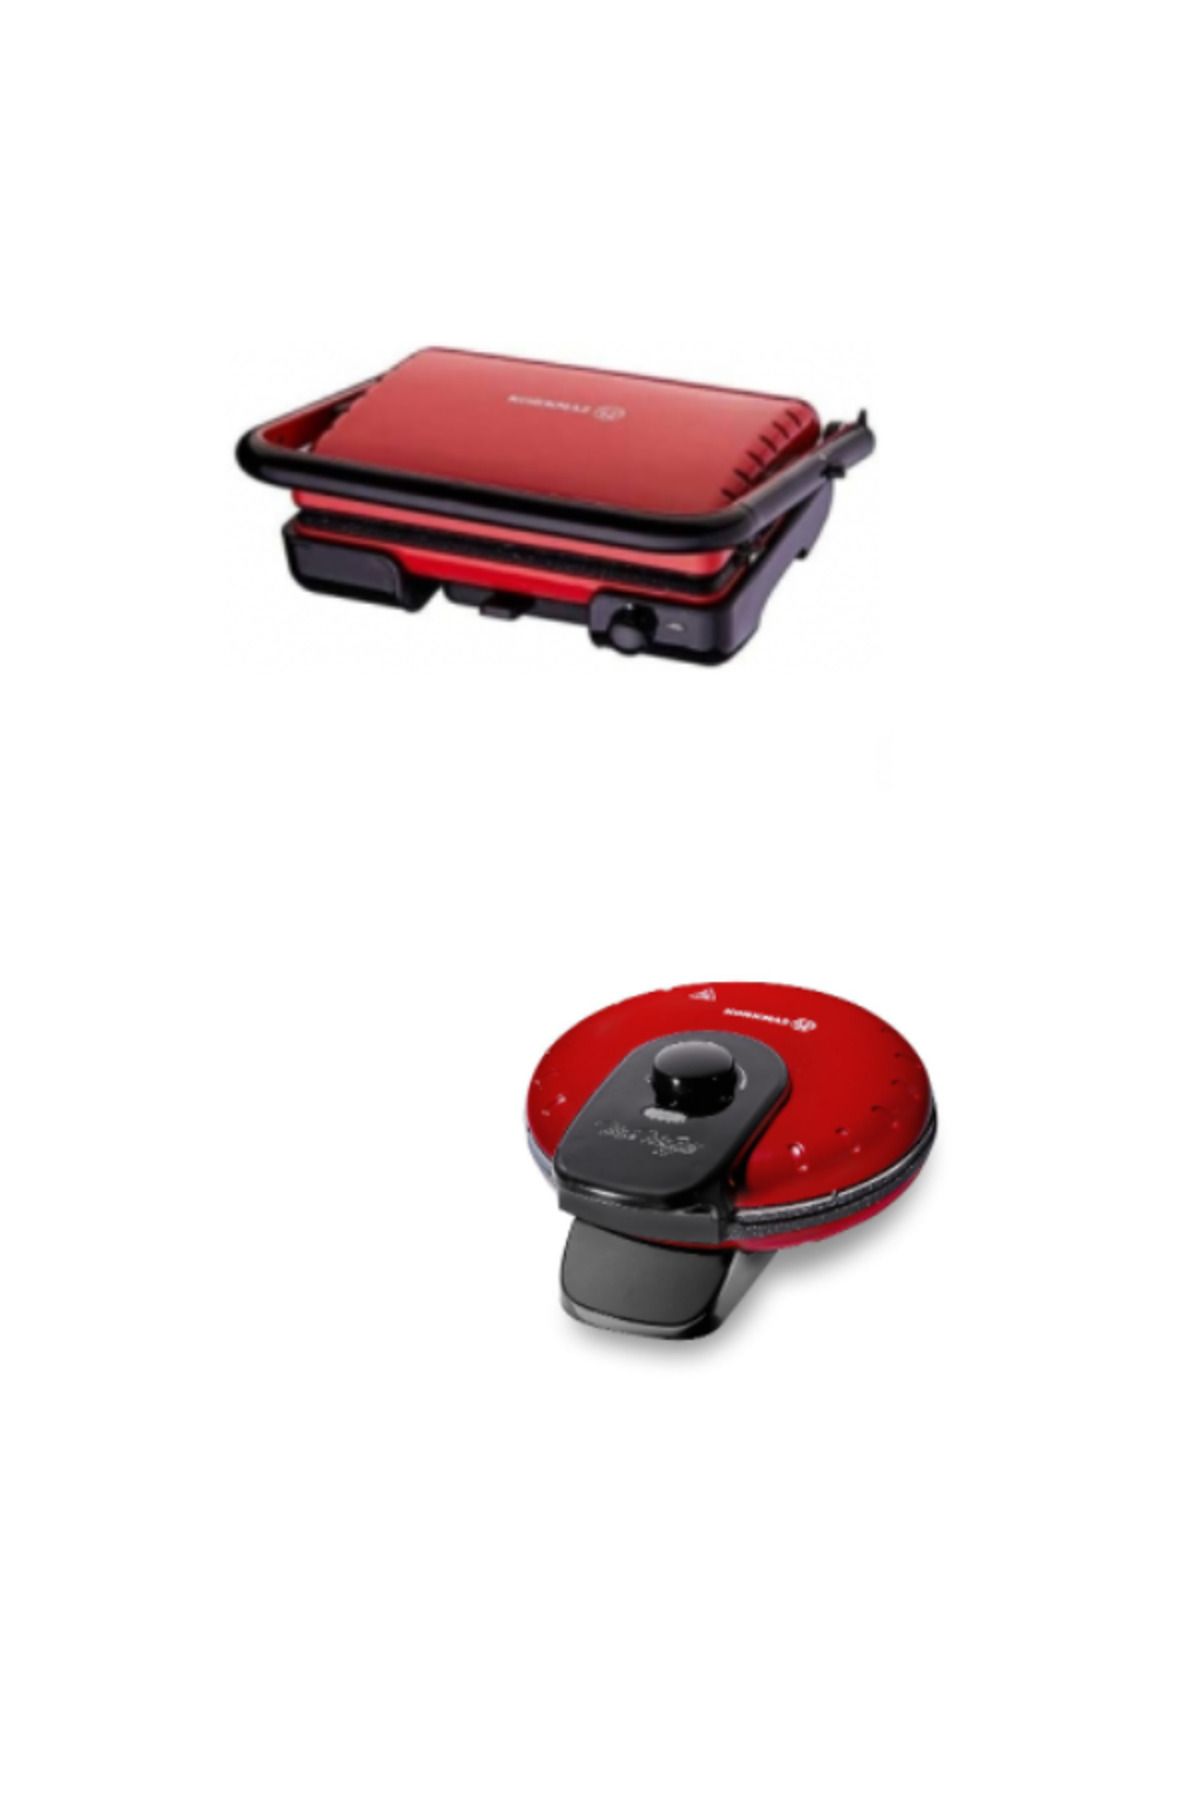 KORKMAZ Tostella Tost Makinesi Kırmız ve Mia Waffle Makinesi Kırmızı İkili Set